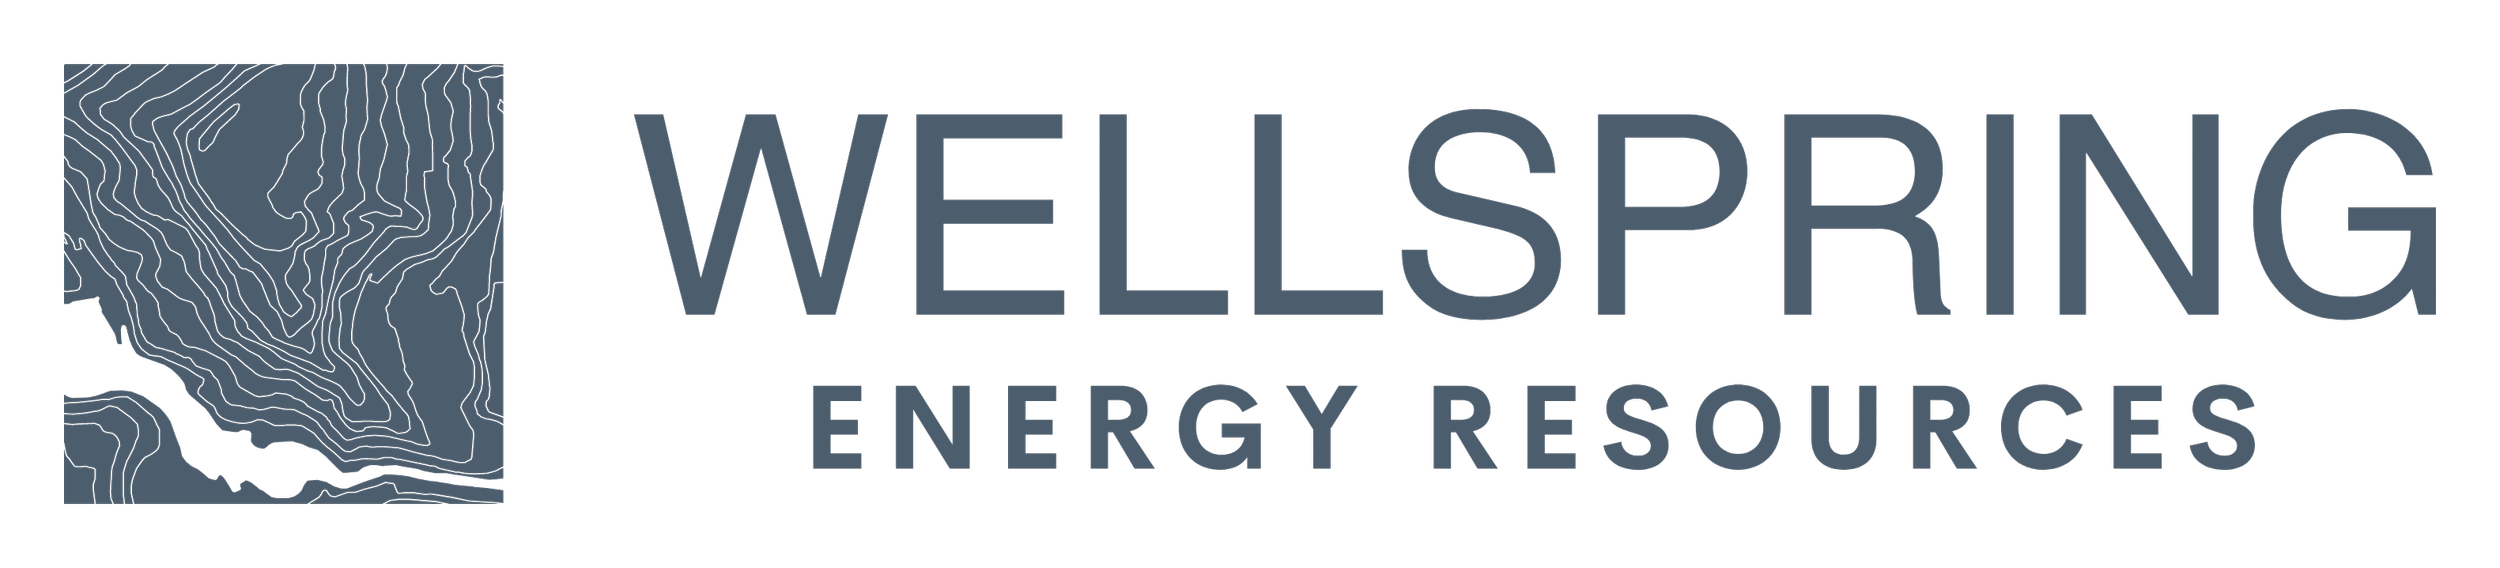 Wellspring Energy Resources